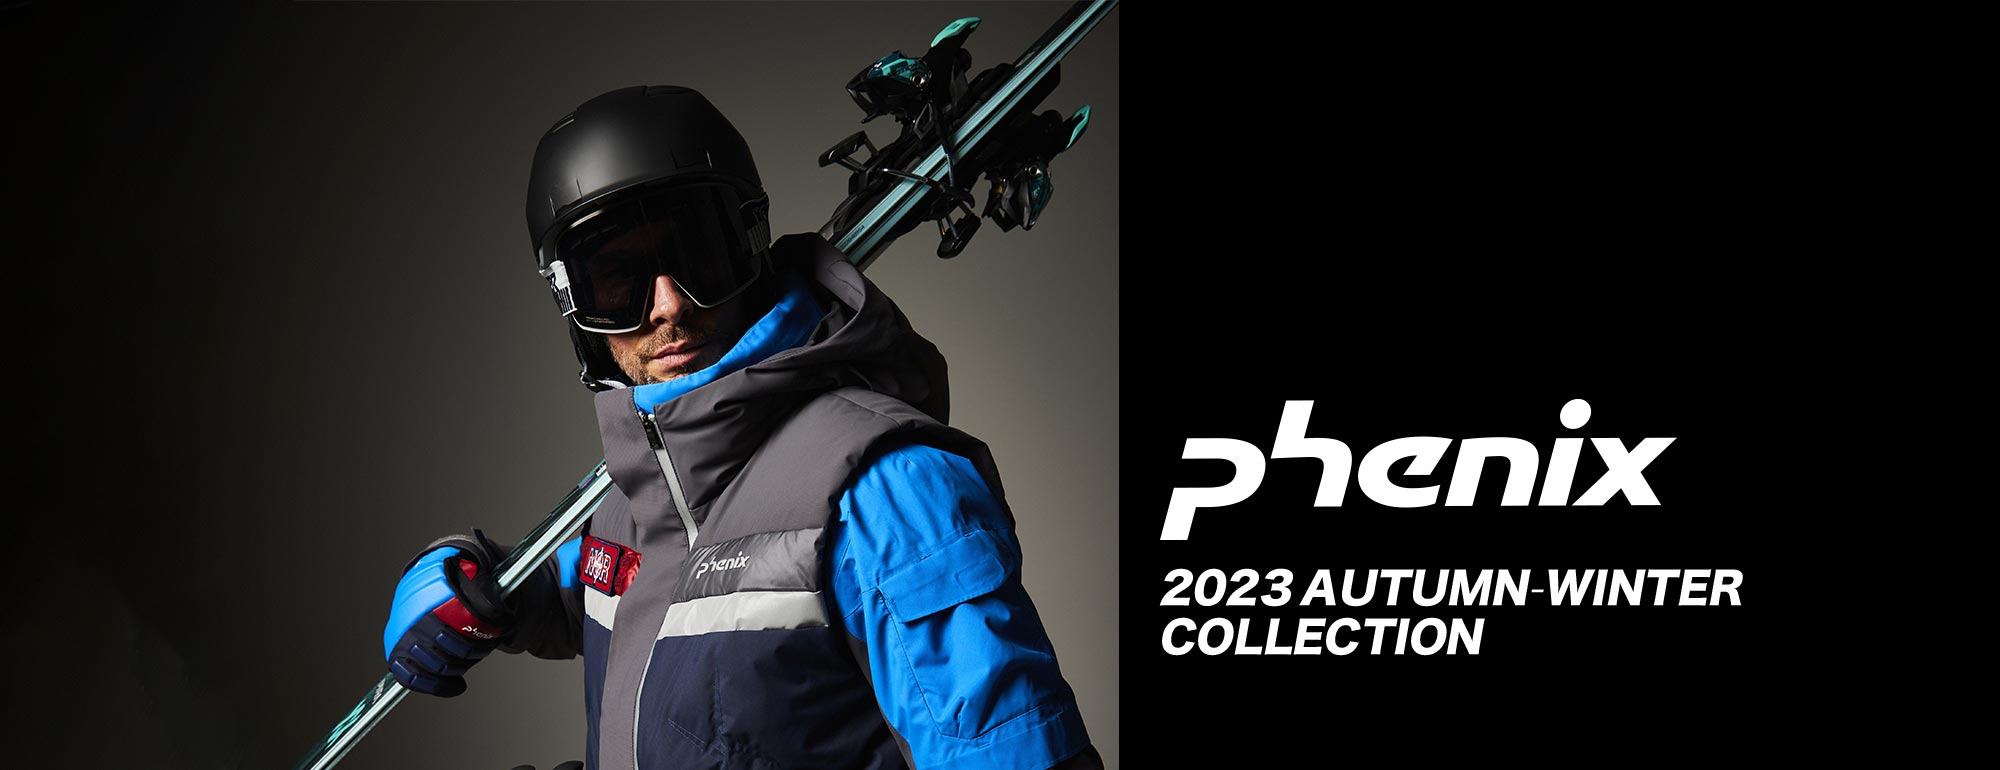 phenix 2023Autumn/Winter Collection